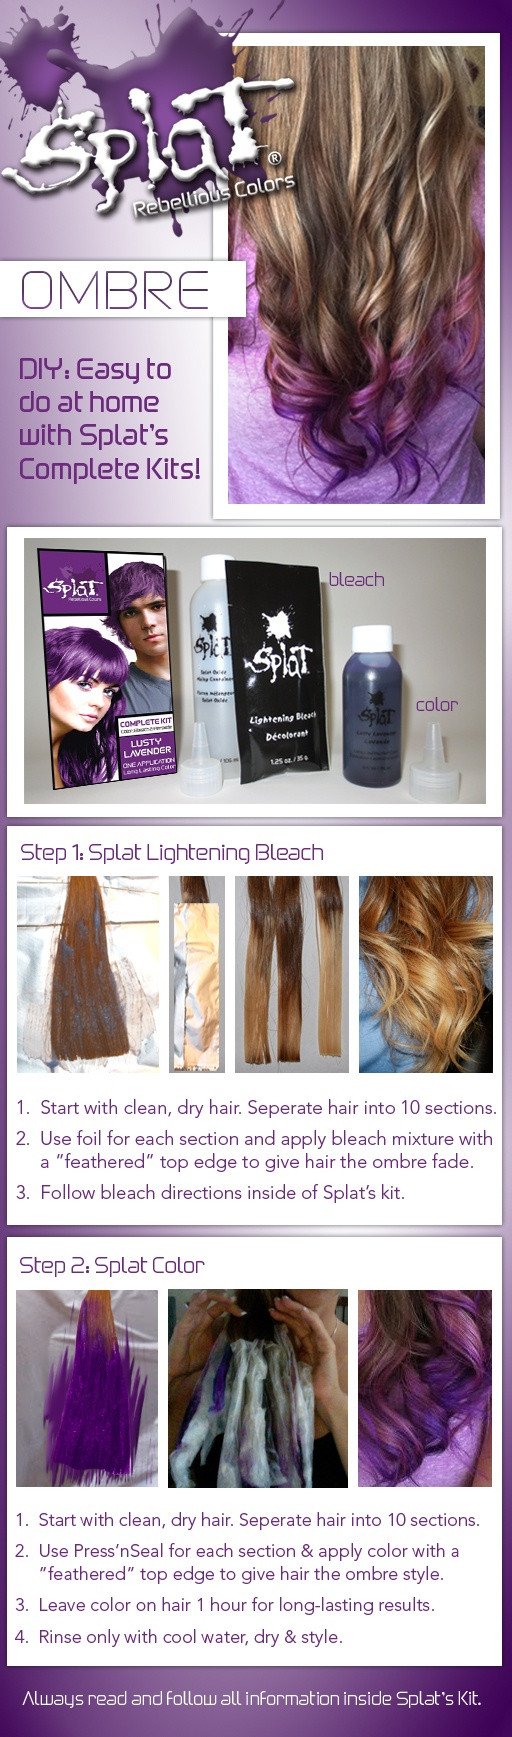 DIY Hair Coloring Tips
 7 best DIY Splat Hair Color Ideas images on Pinterest